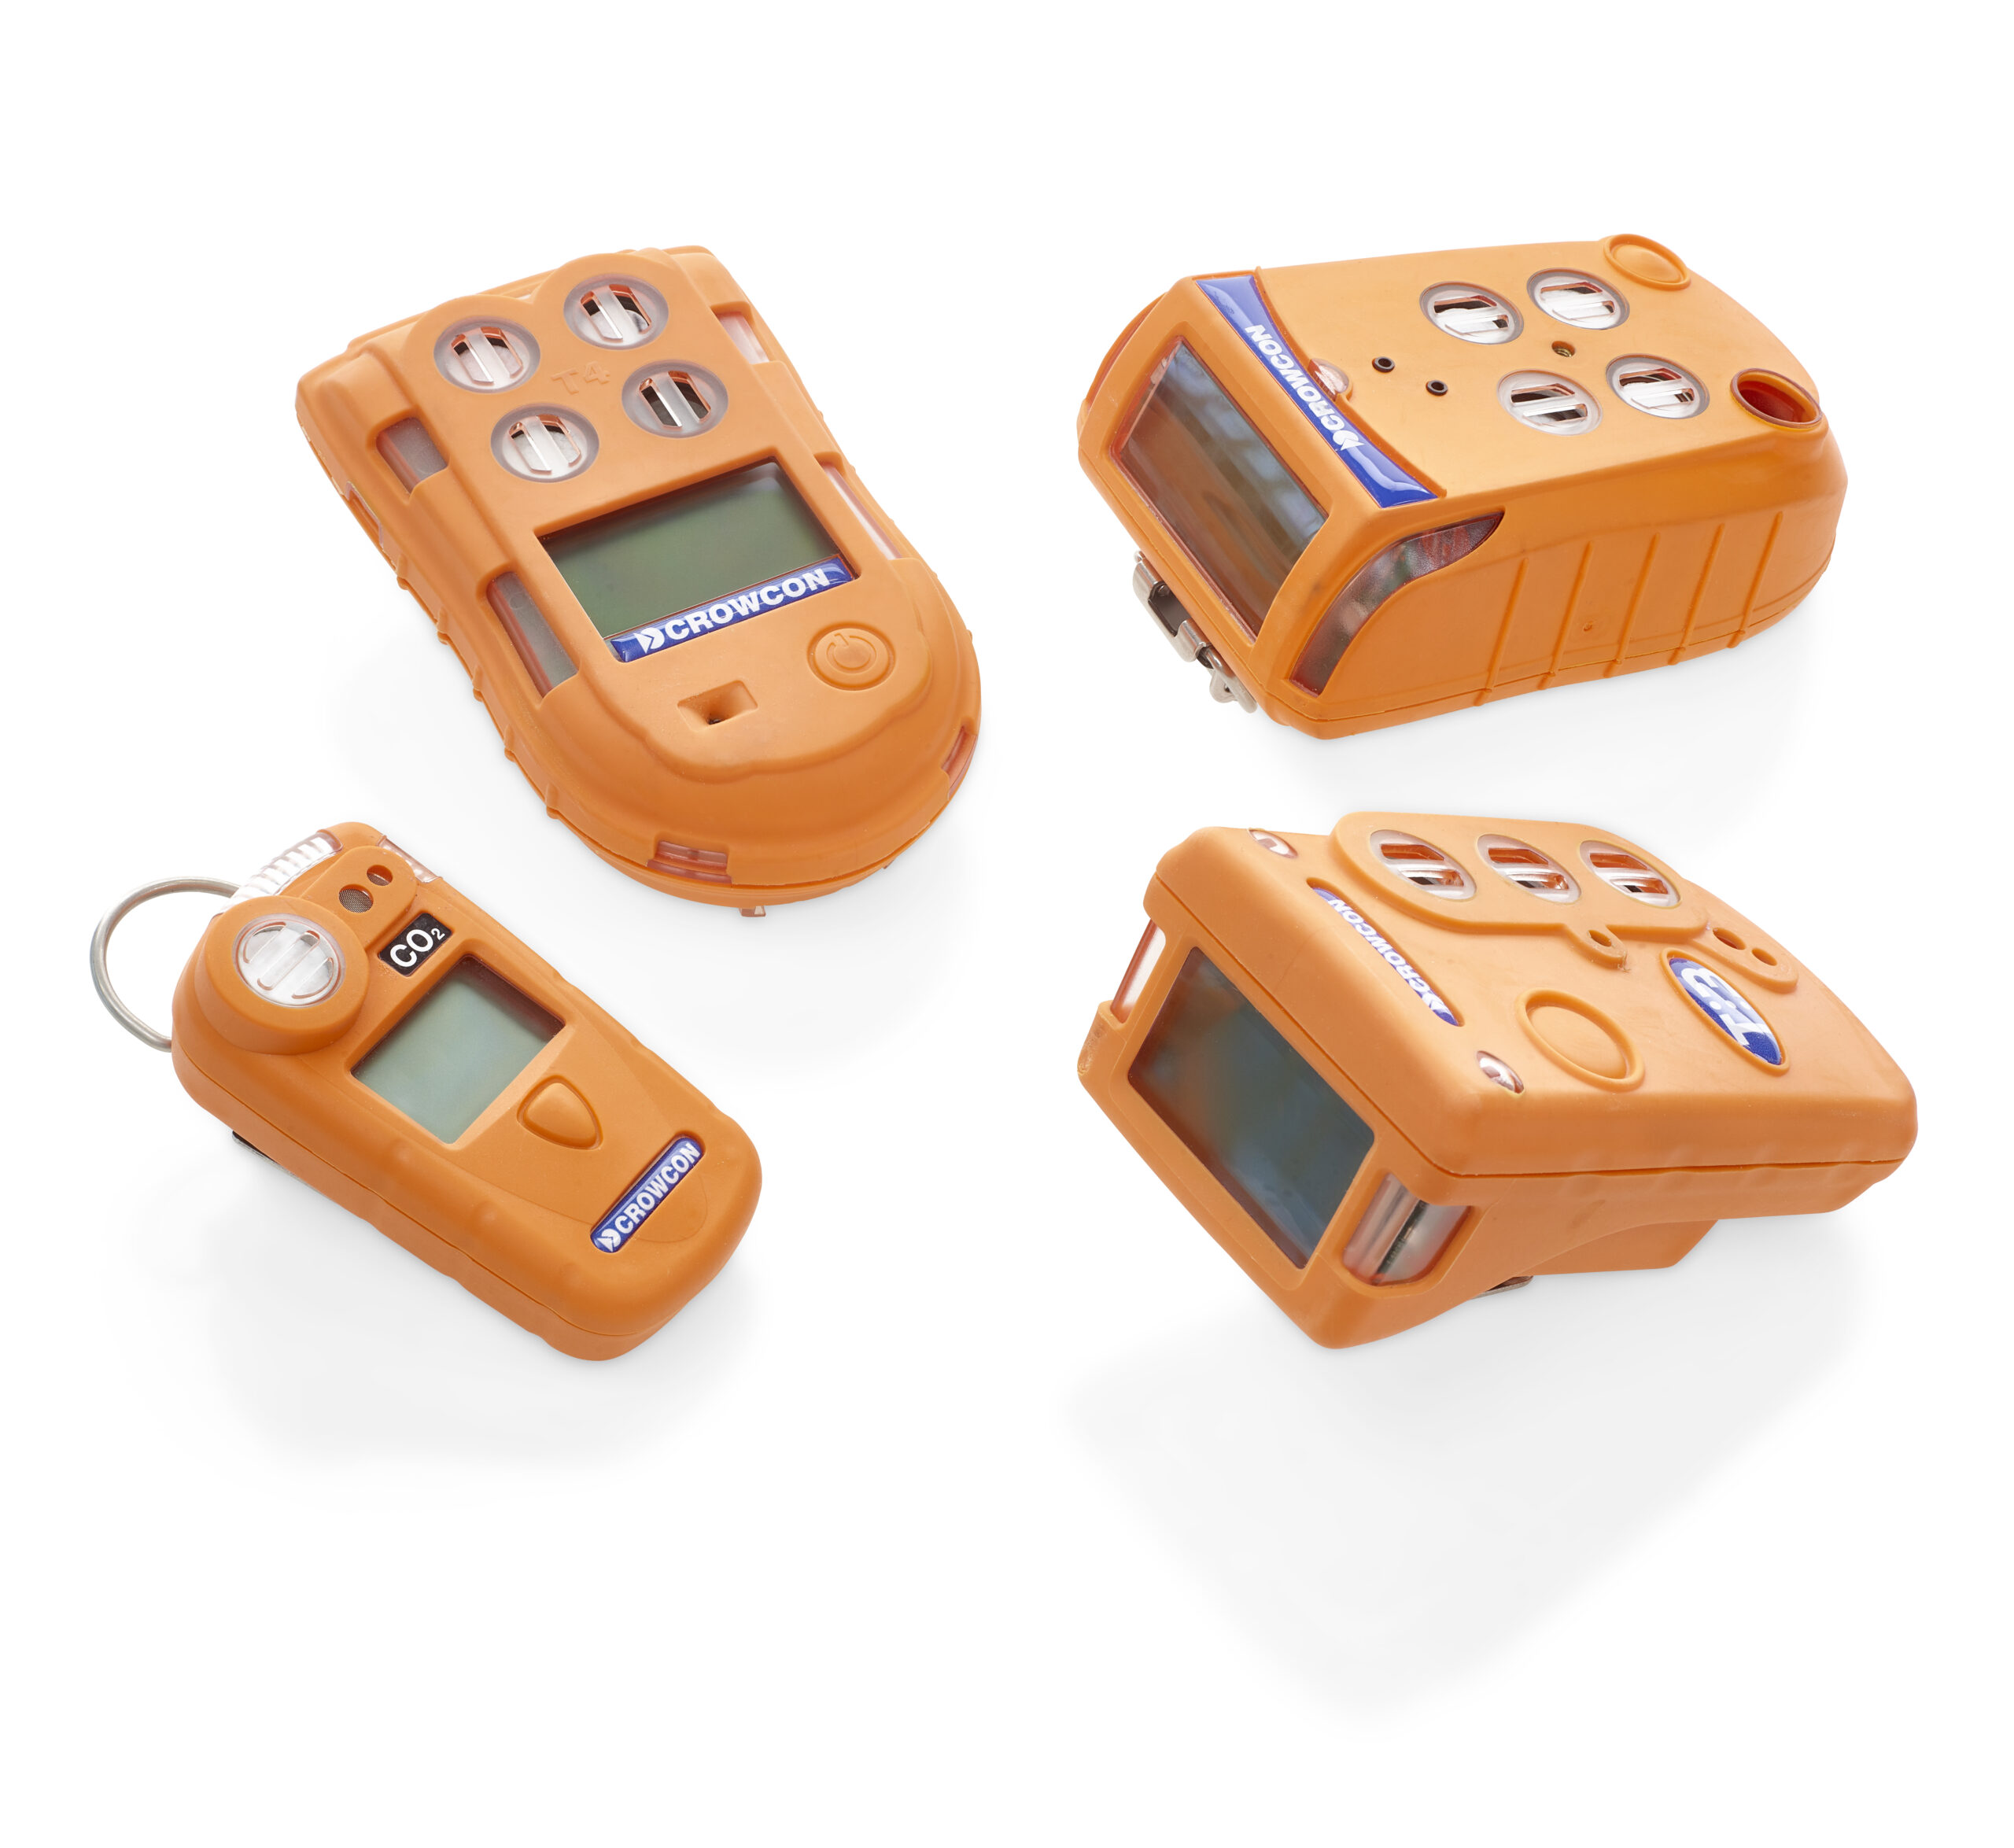 IAQ8494 Ambient CO2 Detector - Crowcon Detection Instruments Ltd